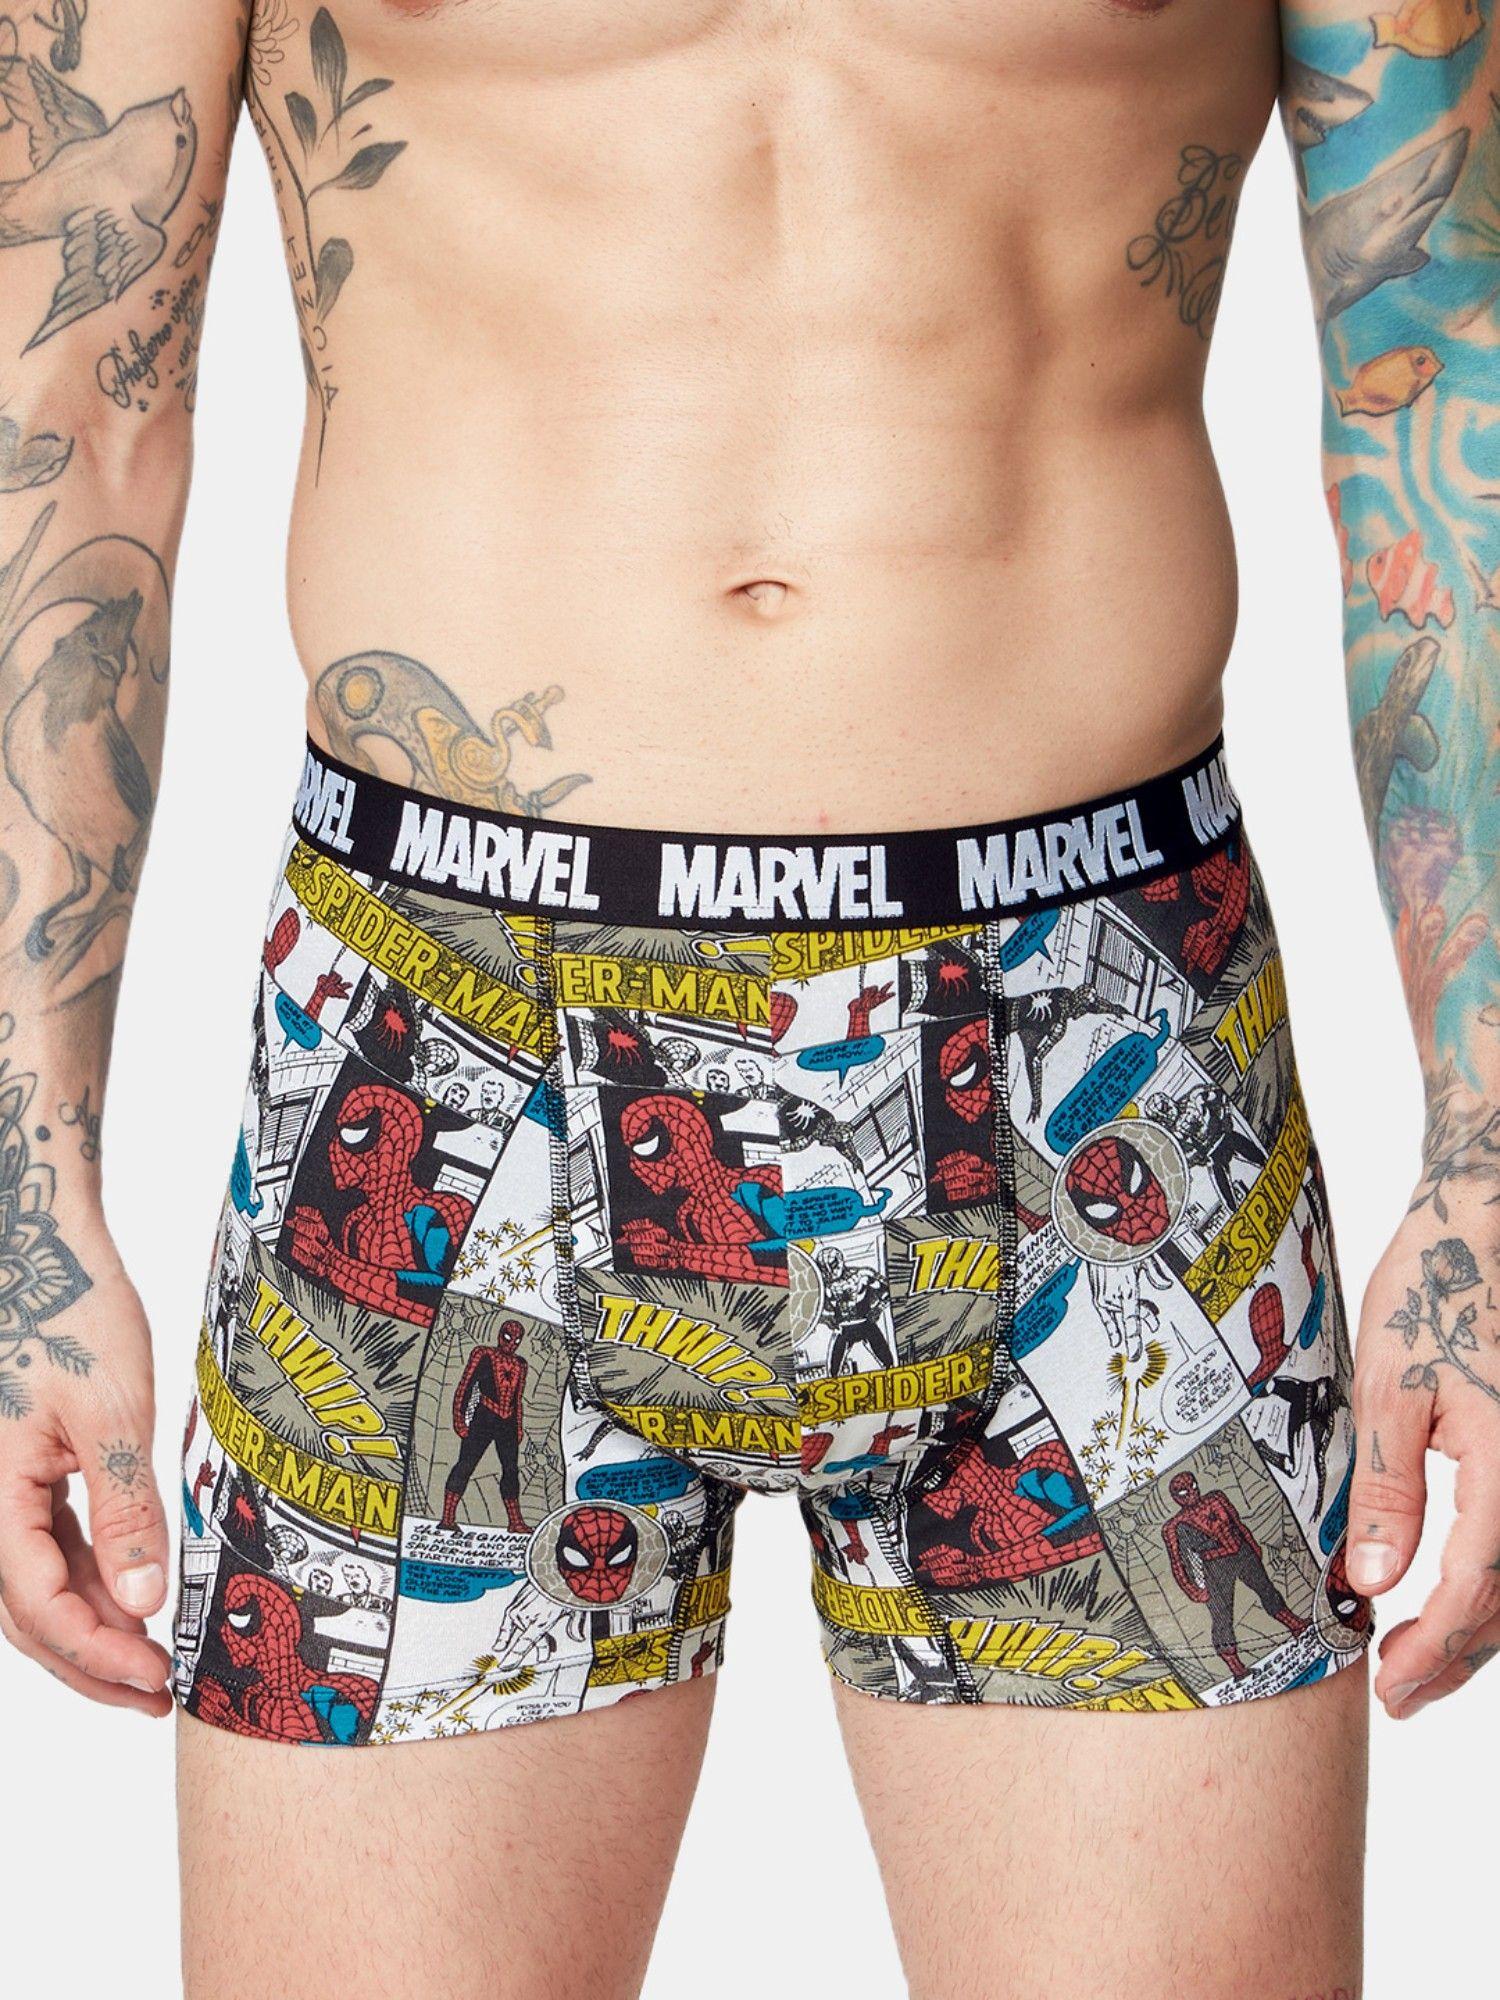 spider-man- comic men trunks underwear multi-color